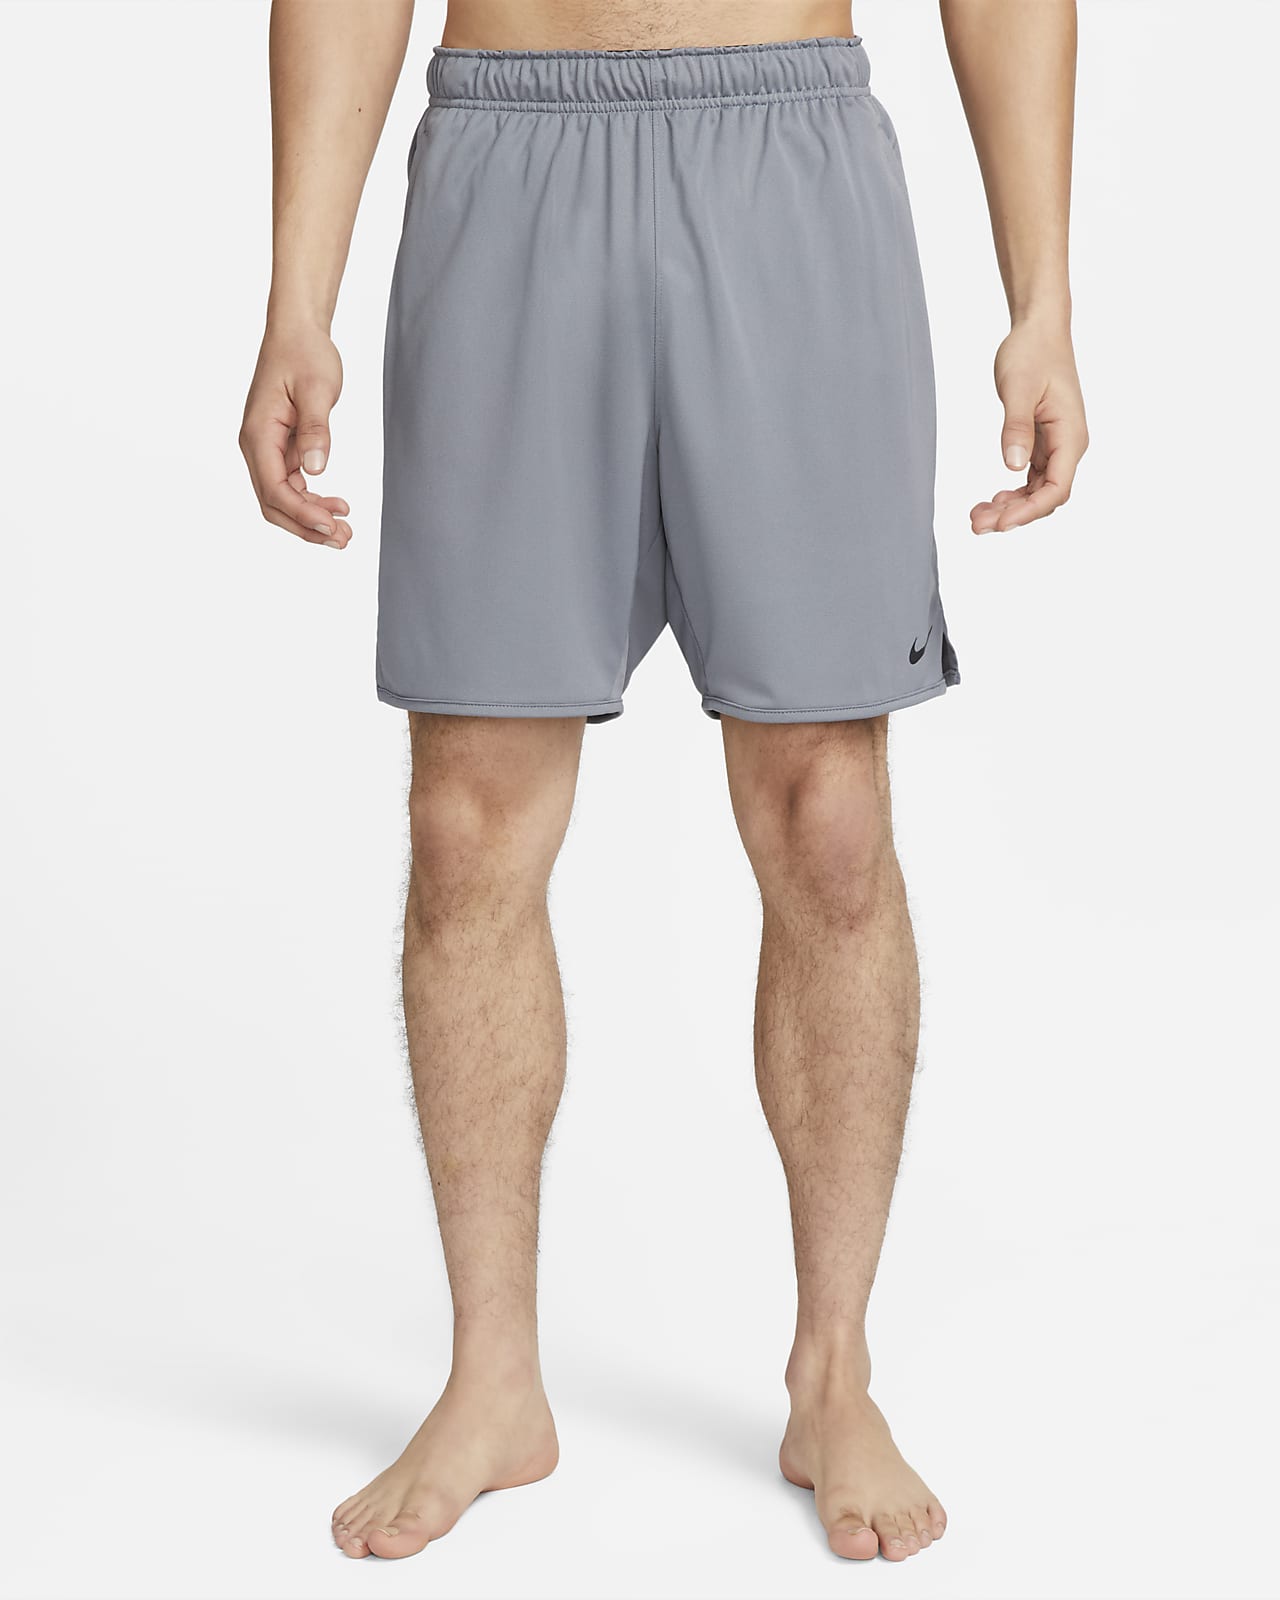 Shorts versátiles sin forro Dri-FIT de 18 cm para hombre Nike Totality